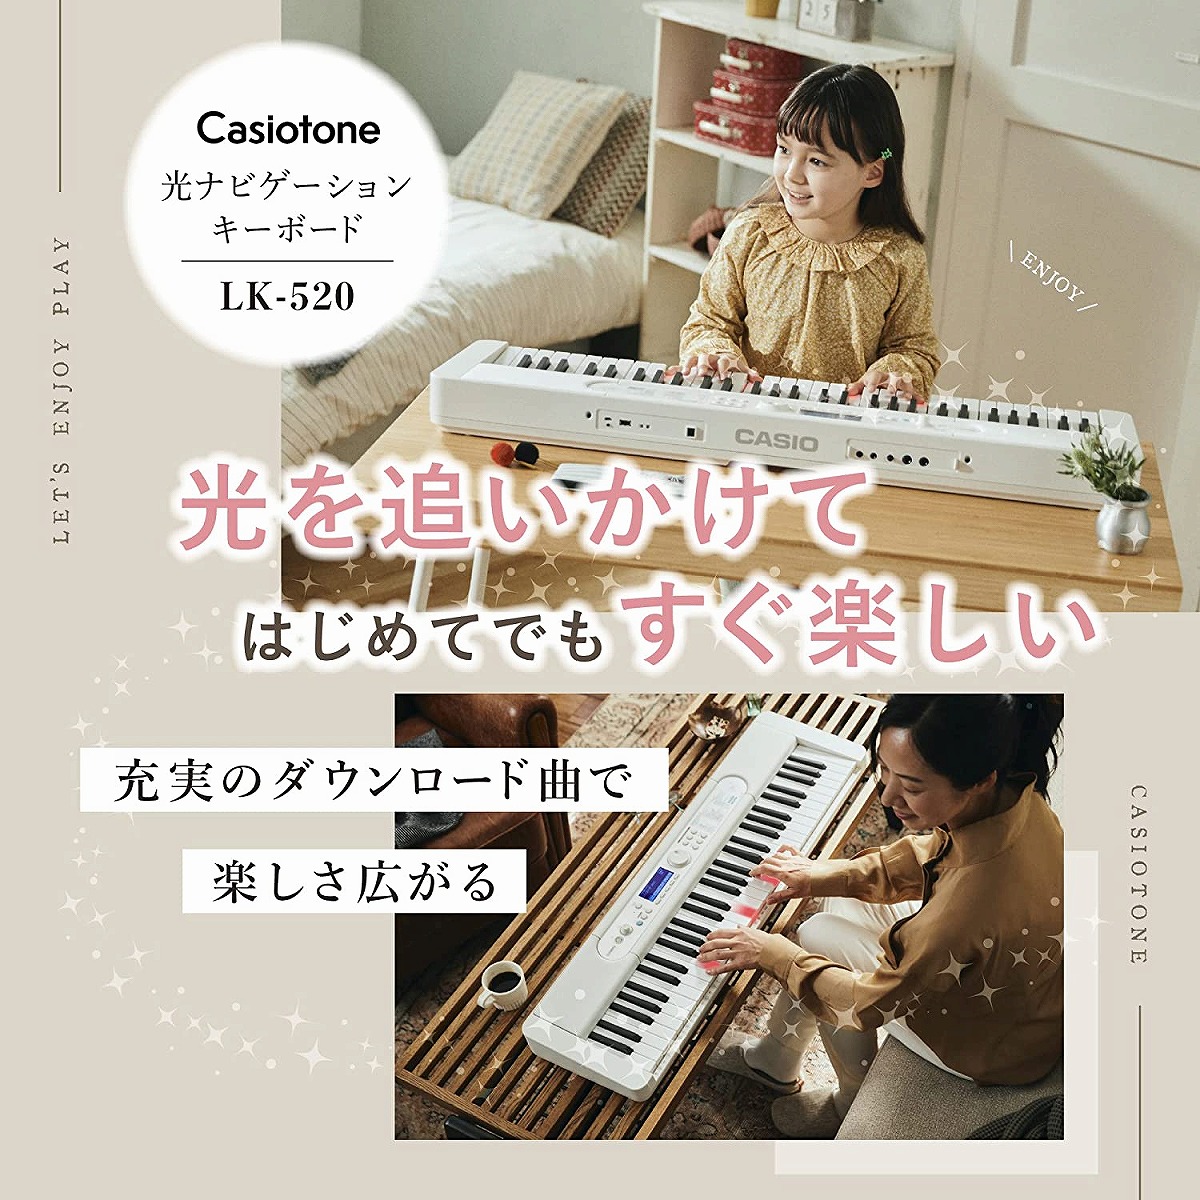 CASIO カシオ / LK-520 Casiotone 光ナビゲーションキーボード【お